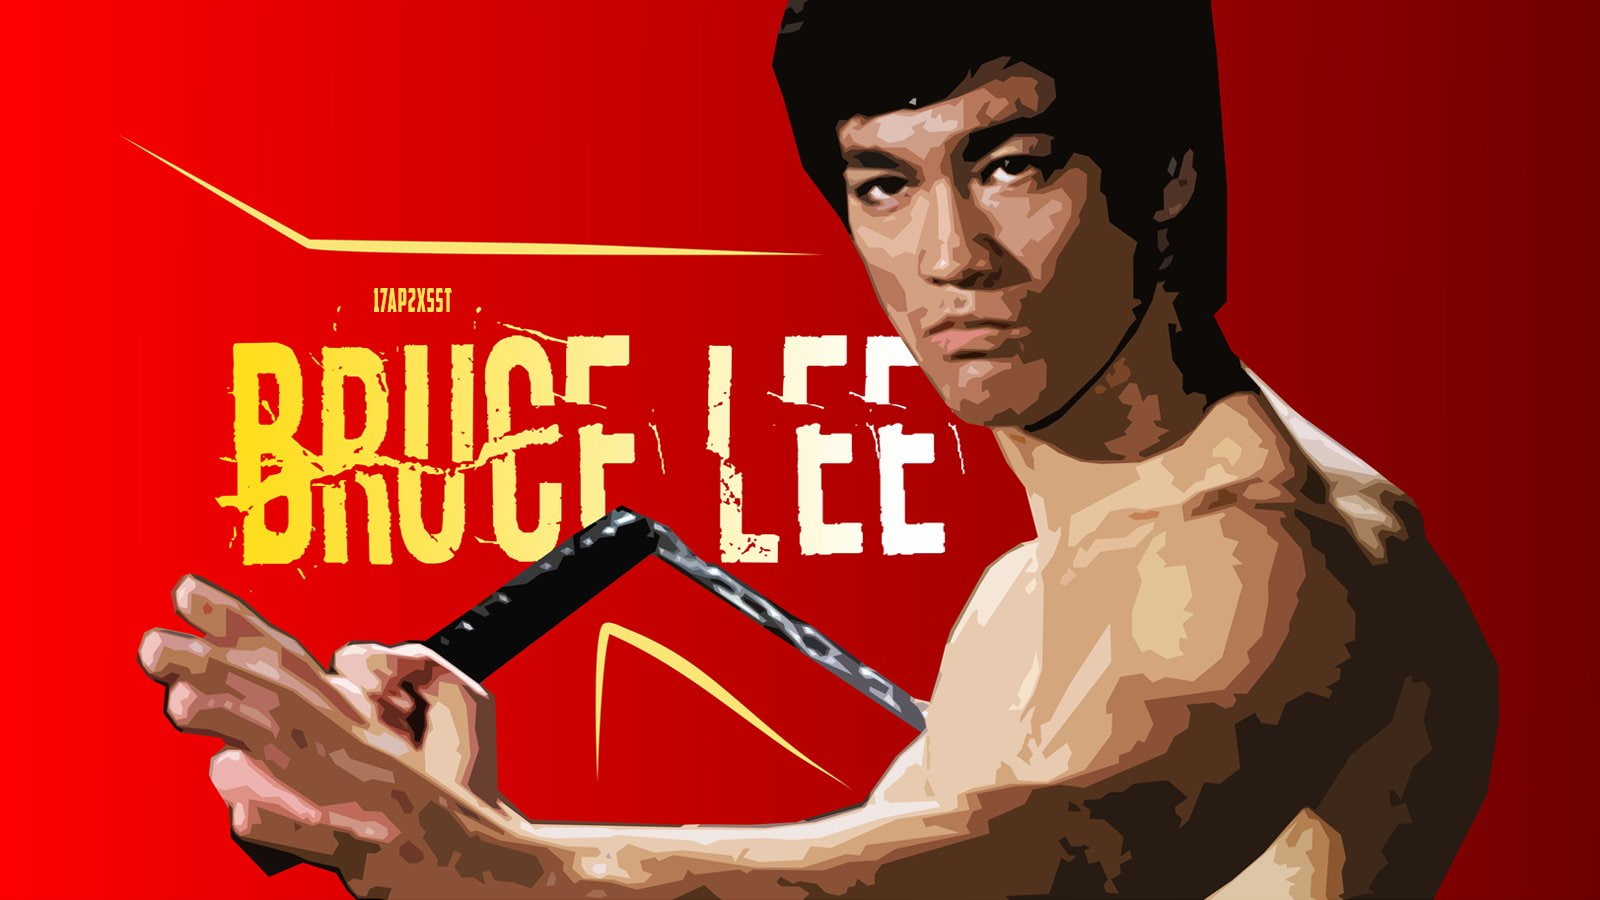 Free Download Hd Wallpaper Actors Bruce Lee Kung Fu Nunchucks Portrait Red Wallpaper Flare